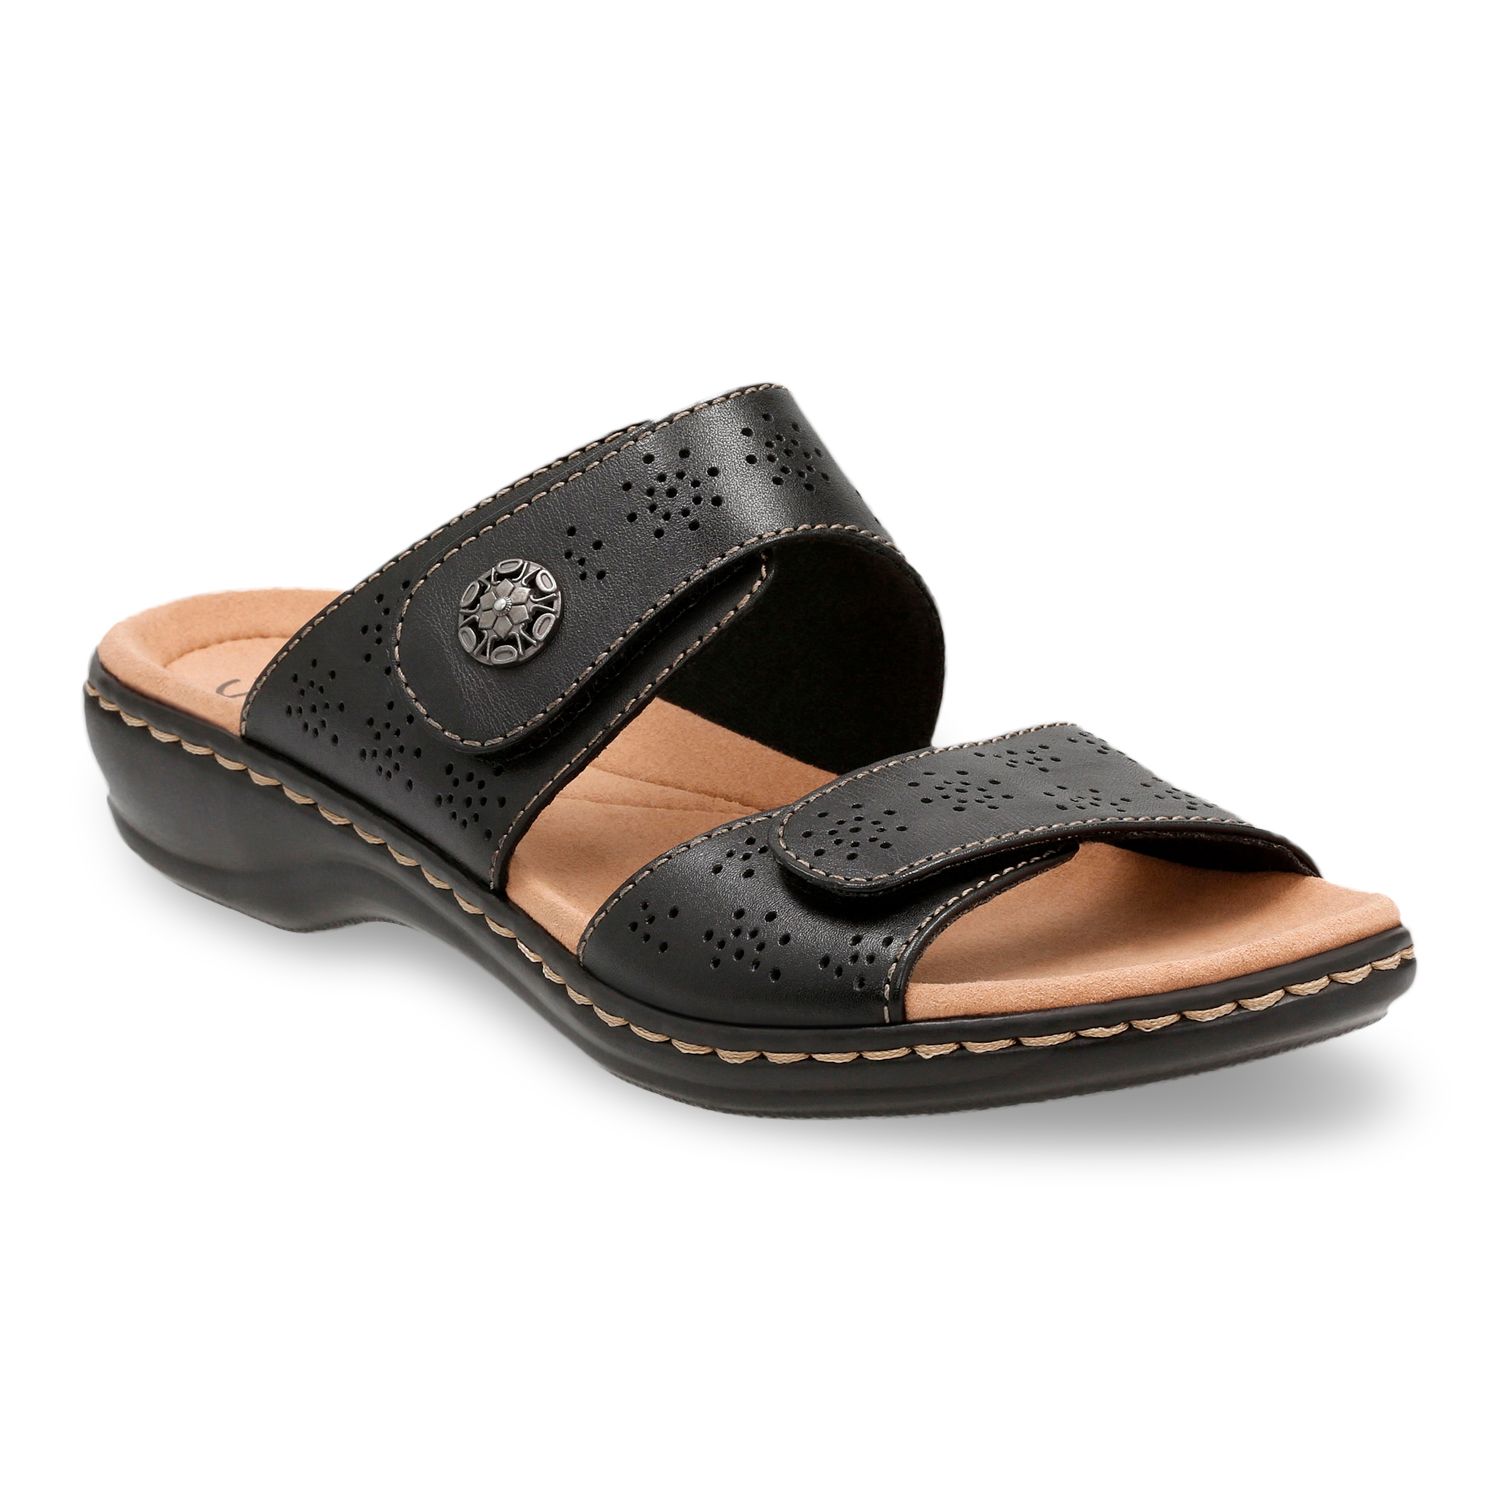 clarks women's leisa lacole slide sandal